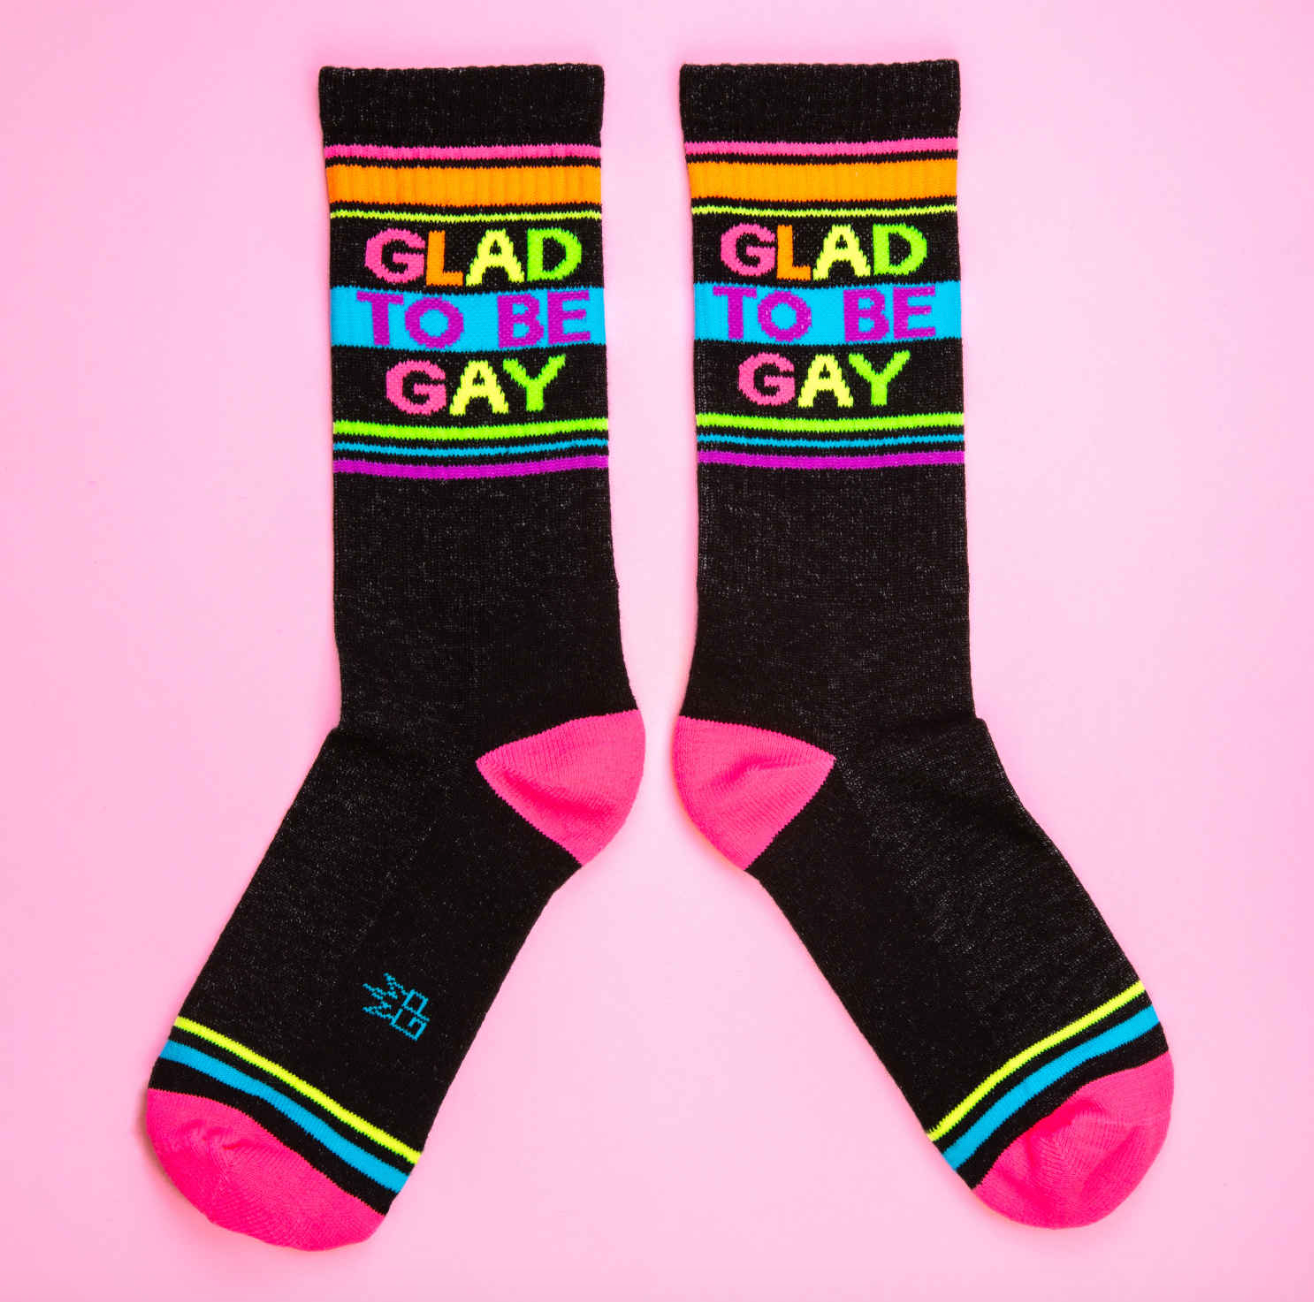 GLAD TO BE GAY Gym Crew Socks